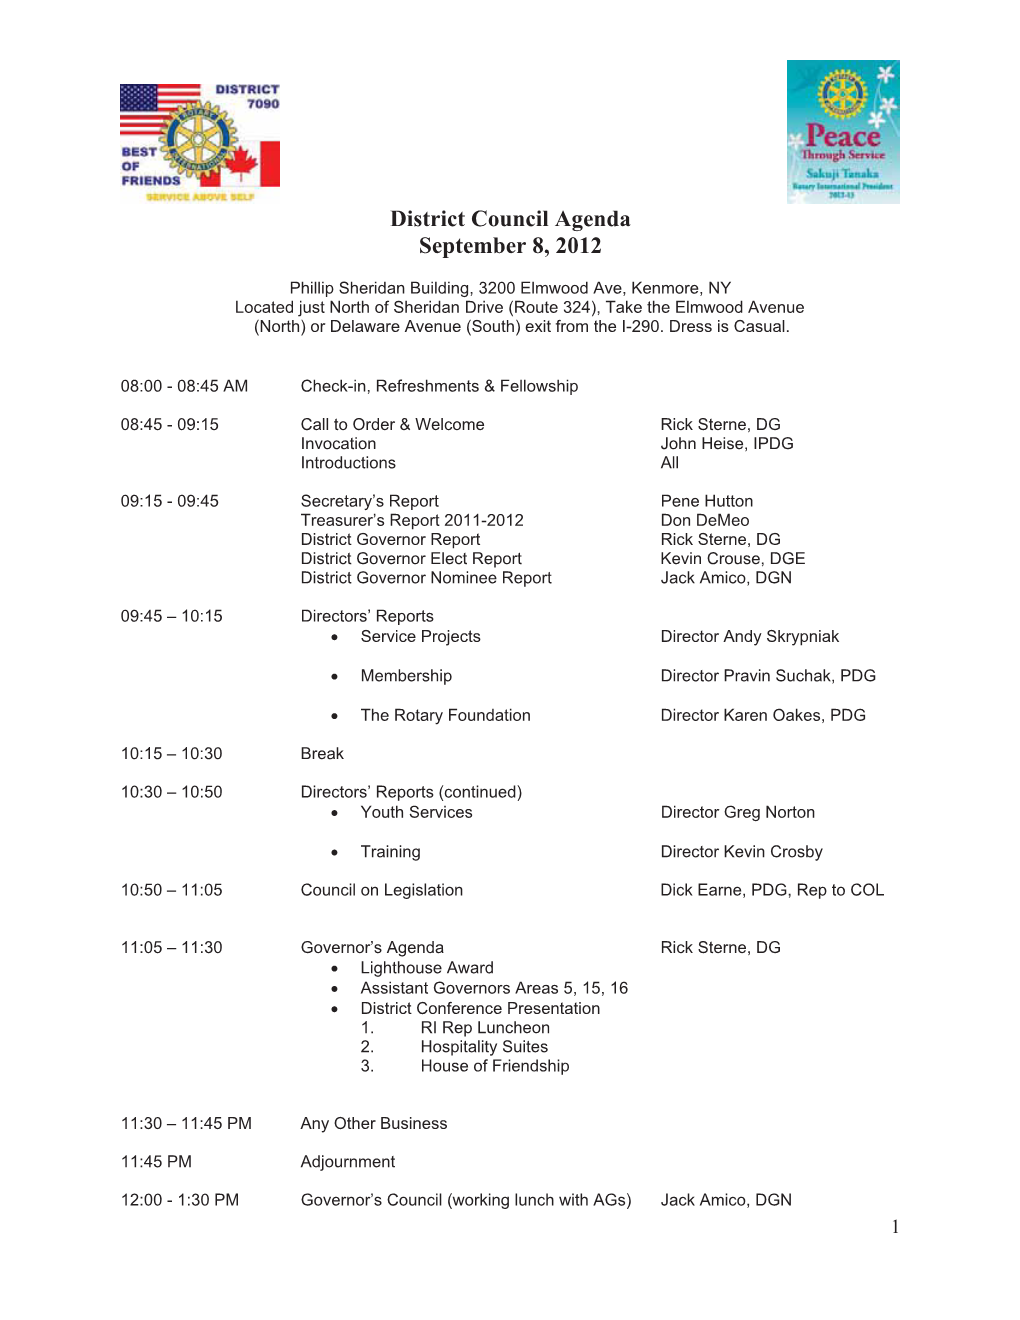 District Council Agenda September 8, 2012